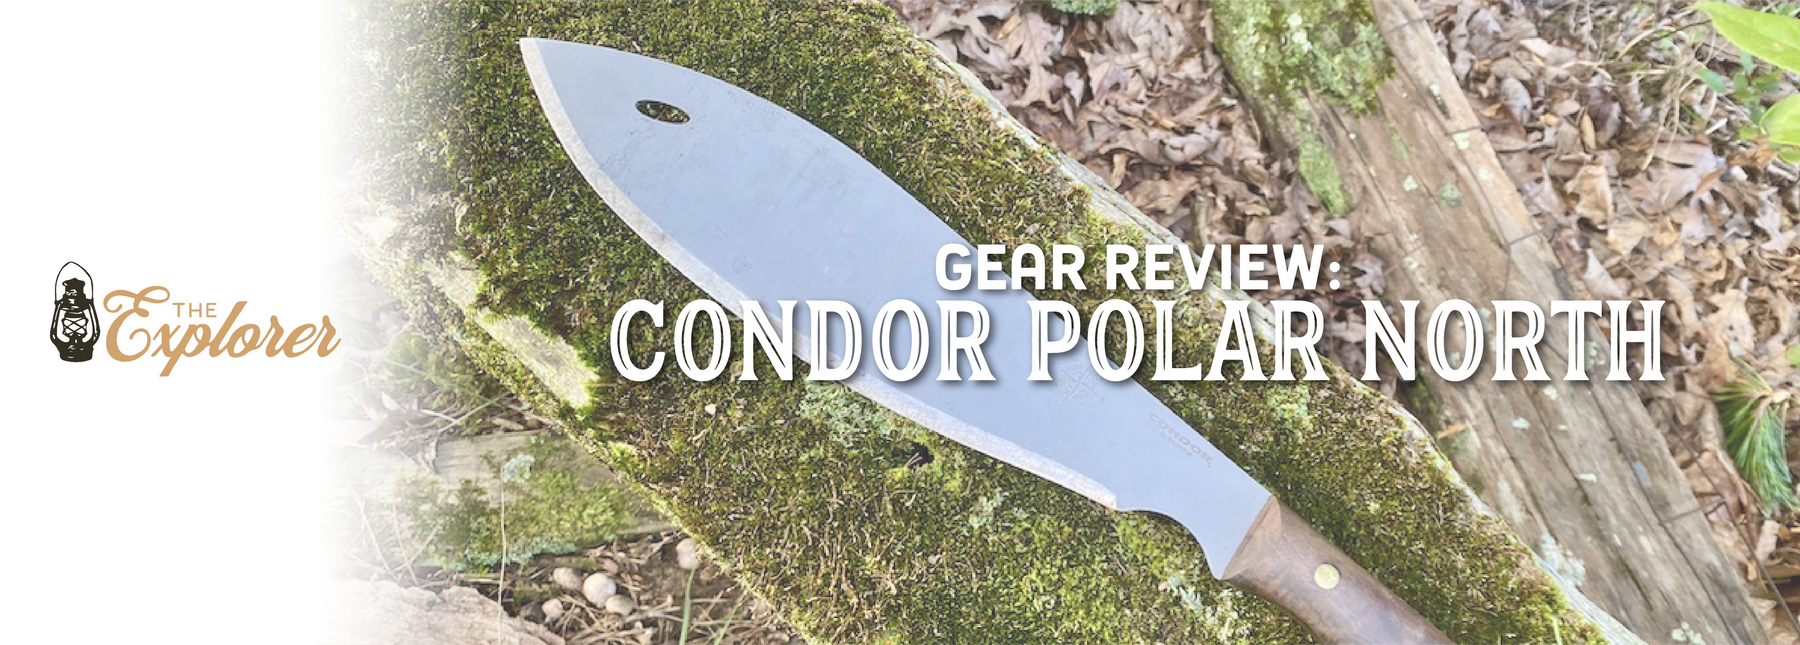 Review: Condor Polar North Machete